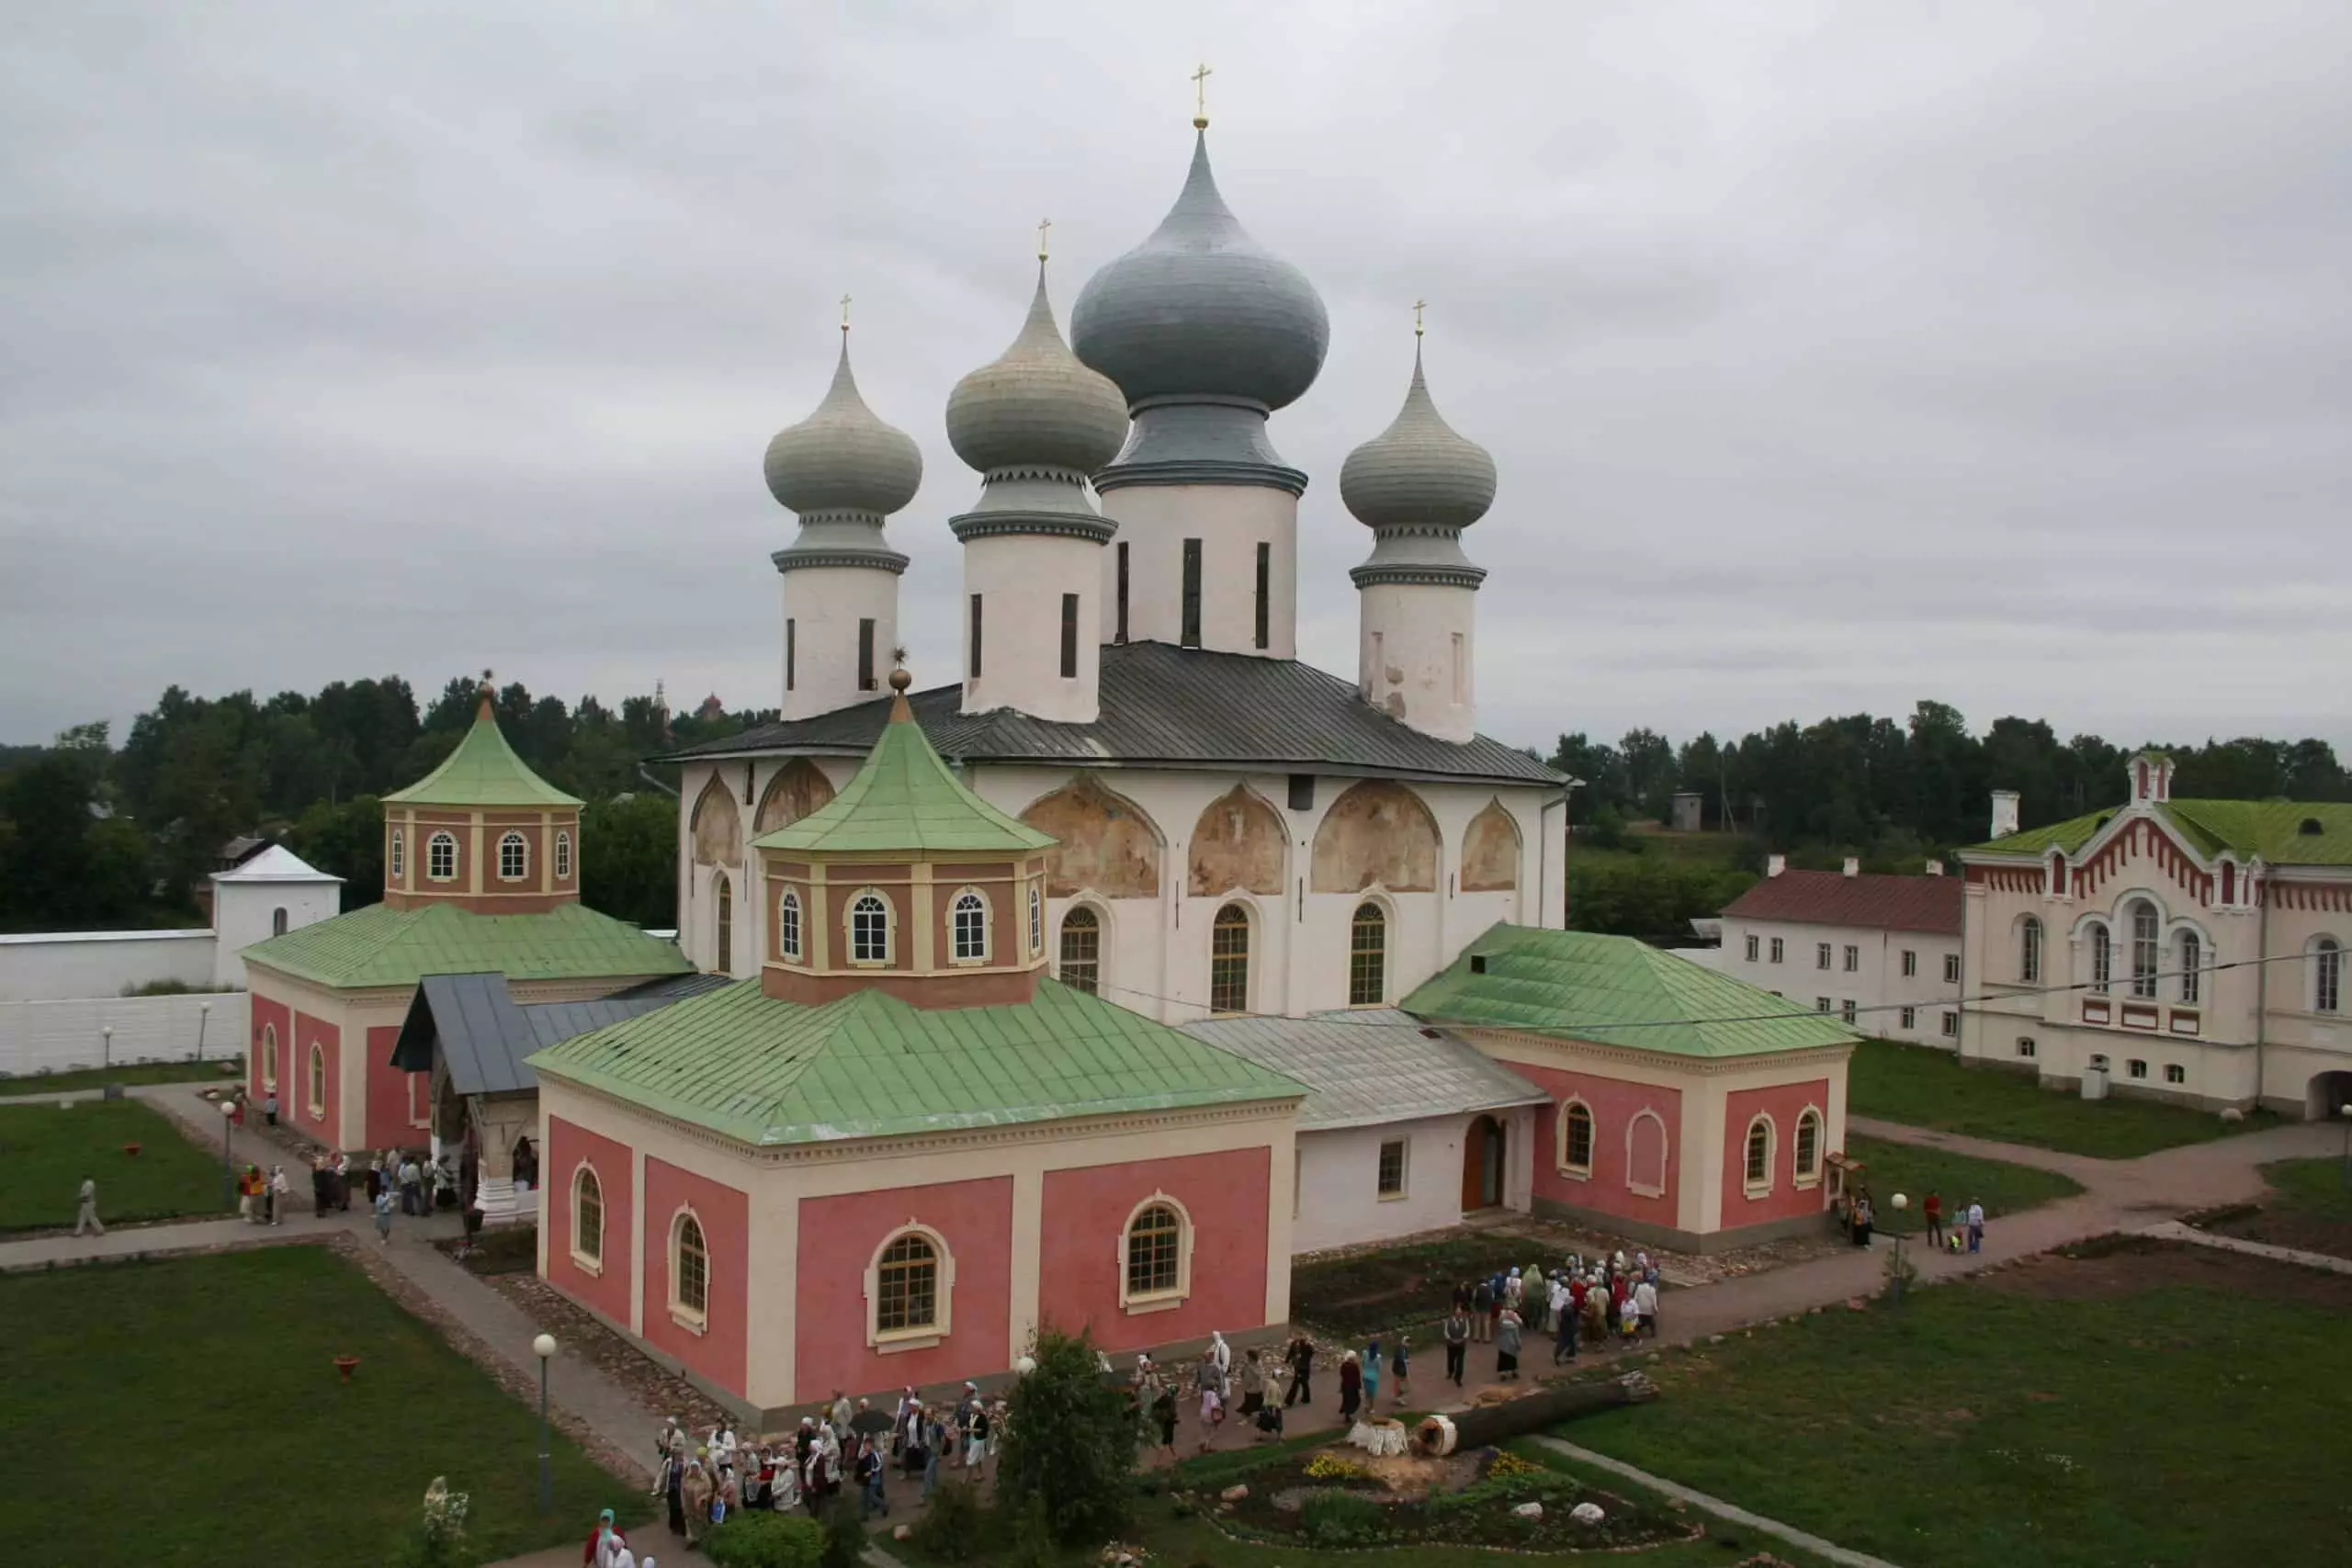 Tikhvinsky Virginsky Assumption修道院